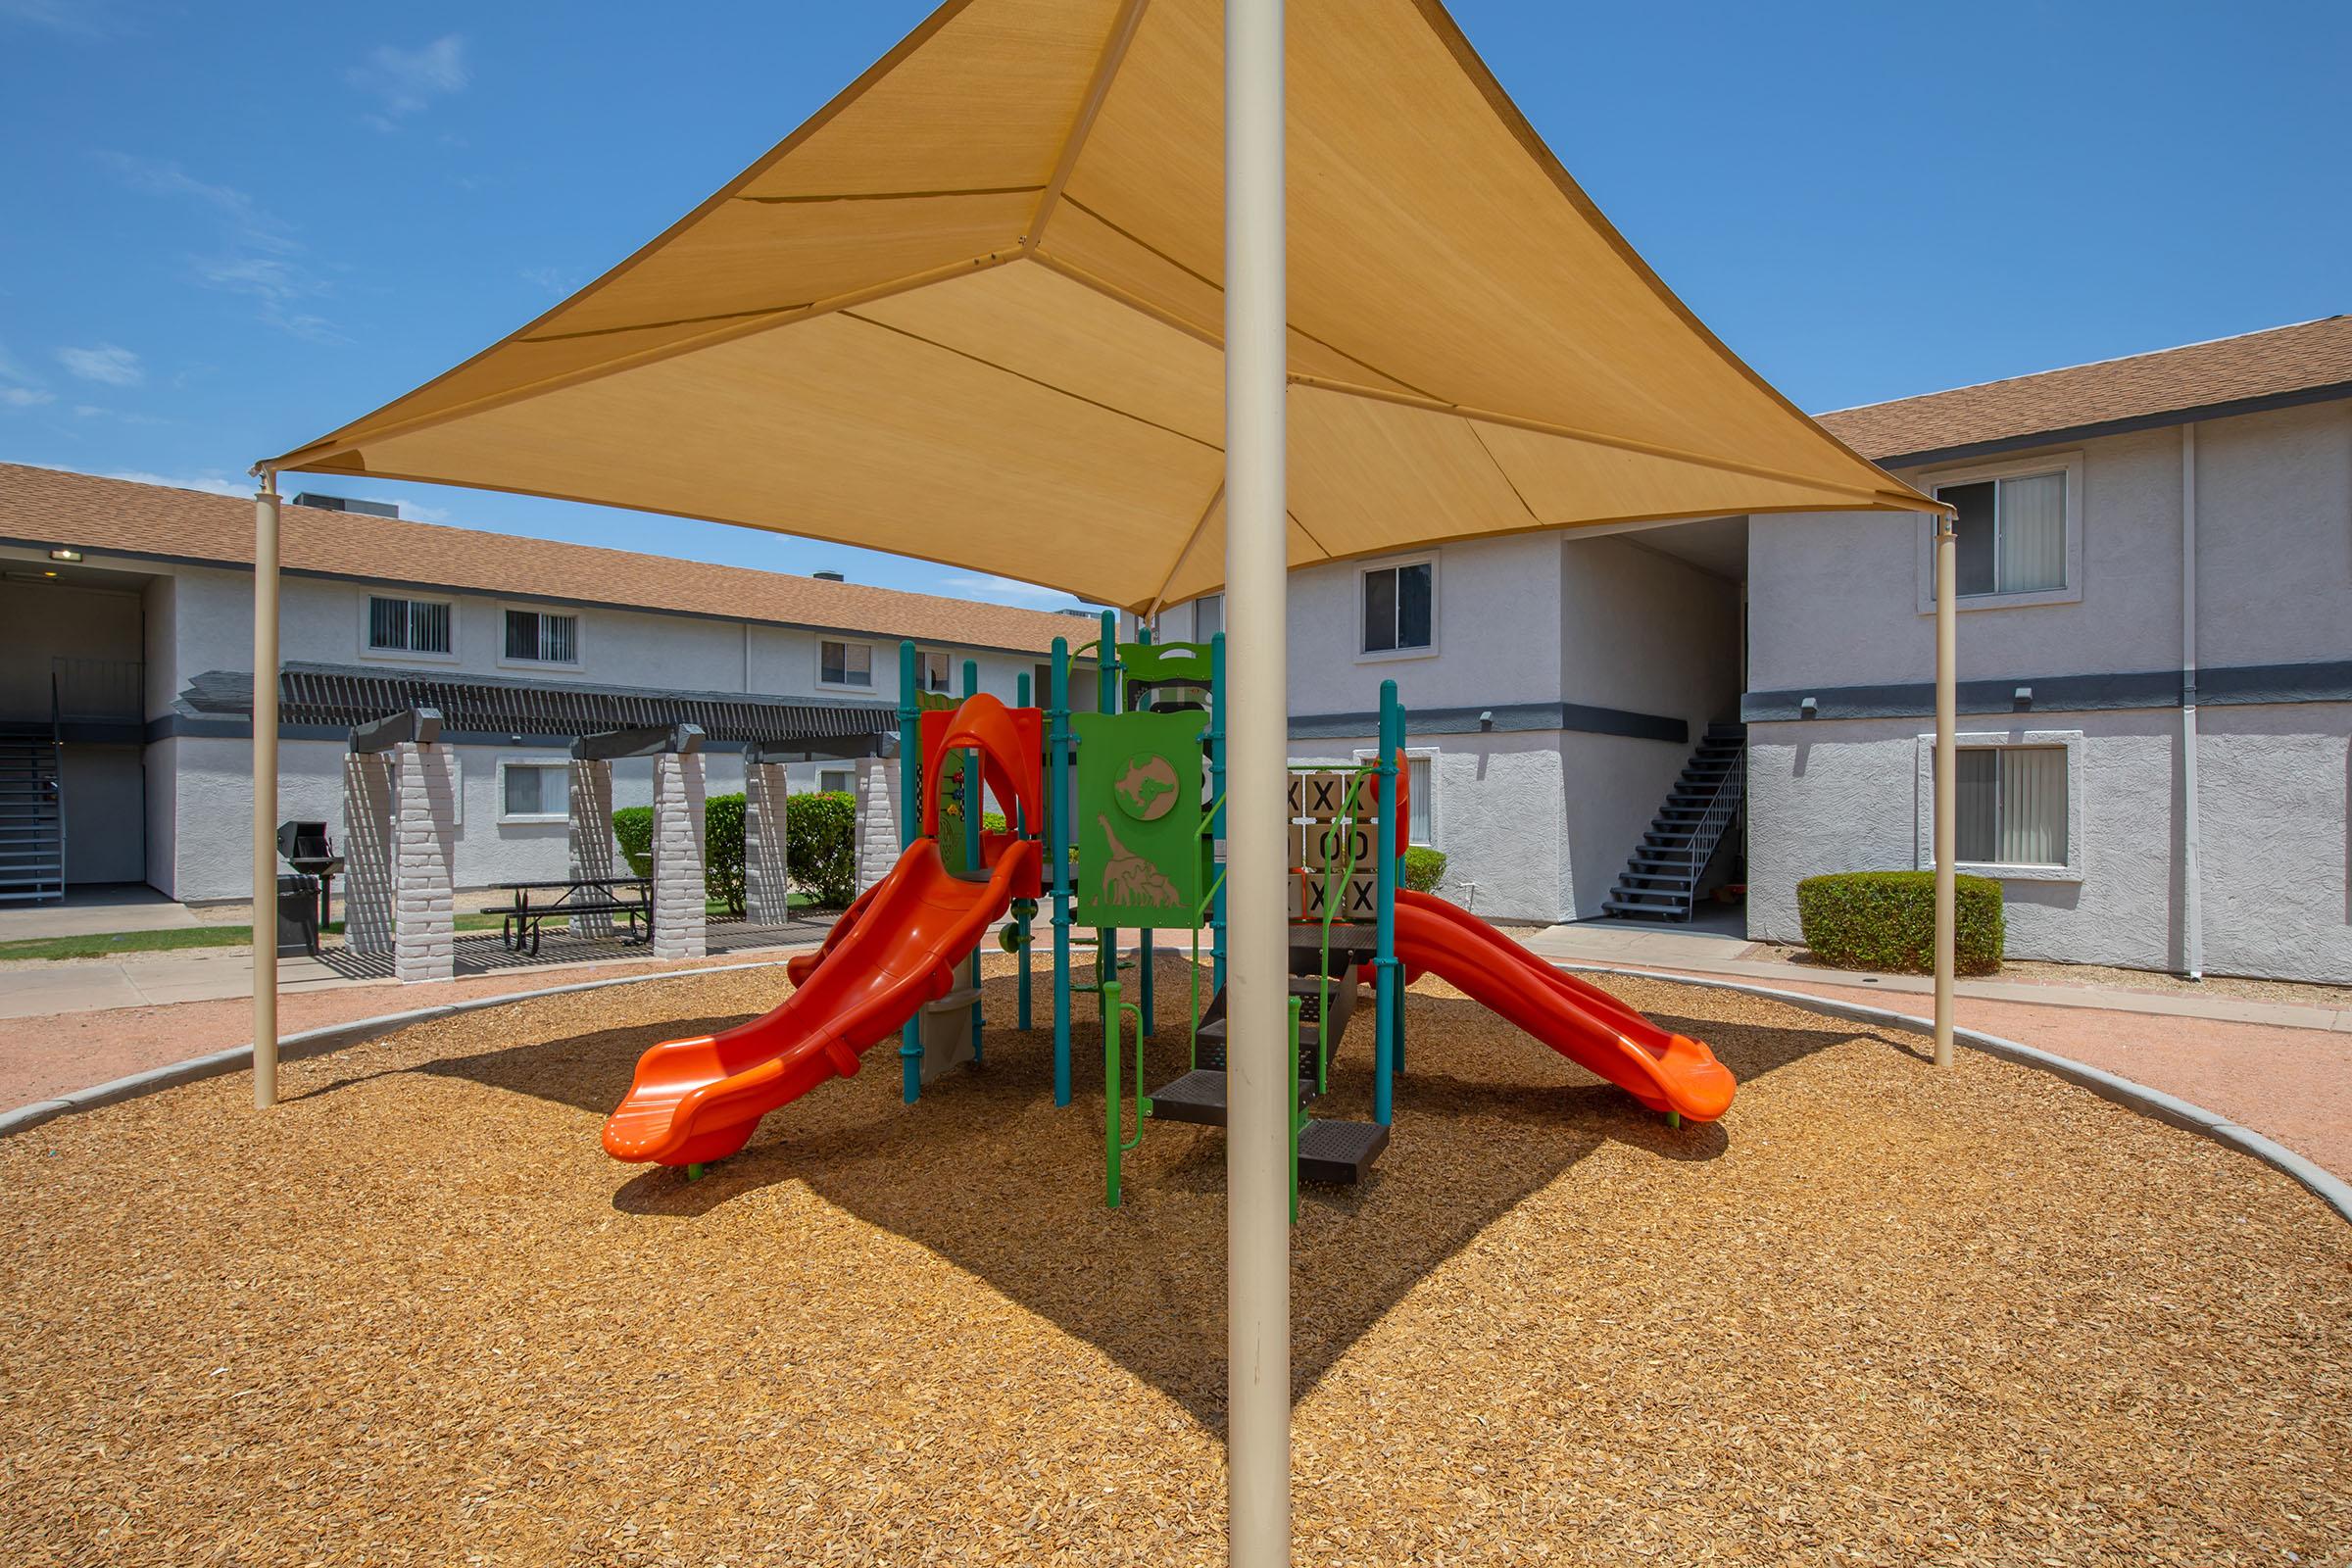 Playground set with large orange slides and sunshade covering